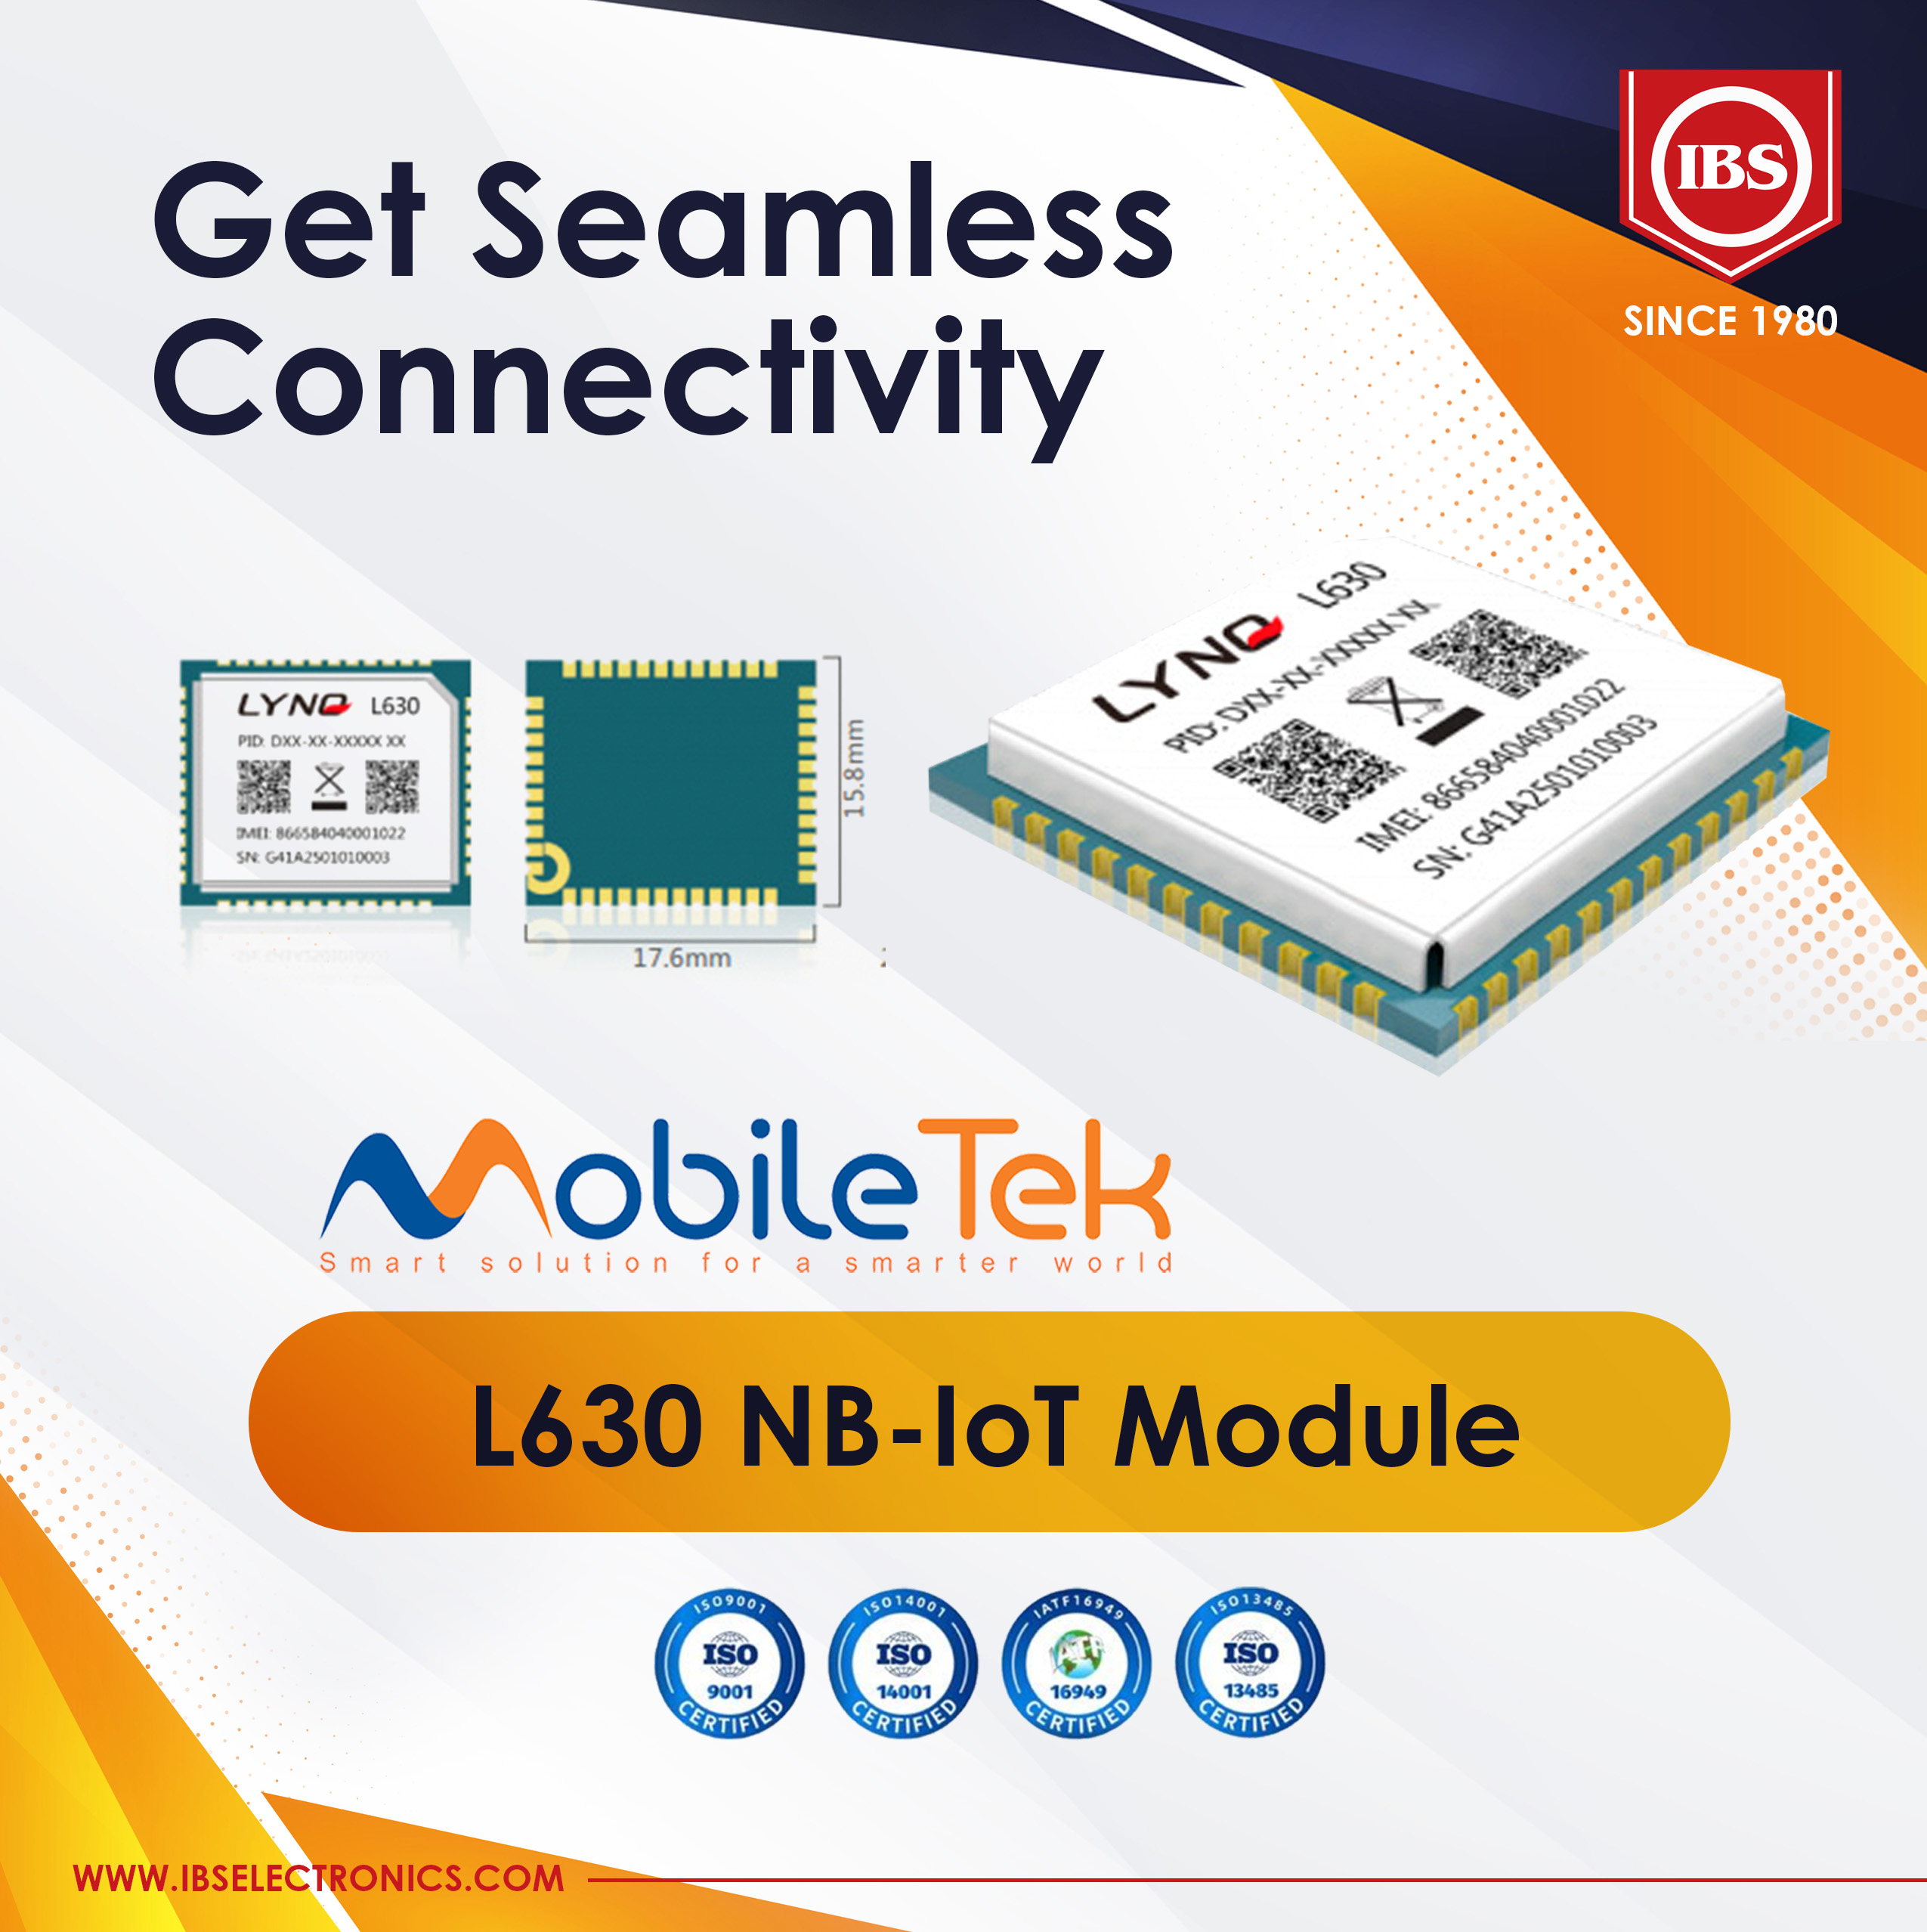 MobileTek L630 NB IoT